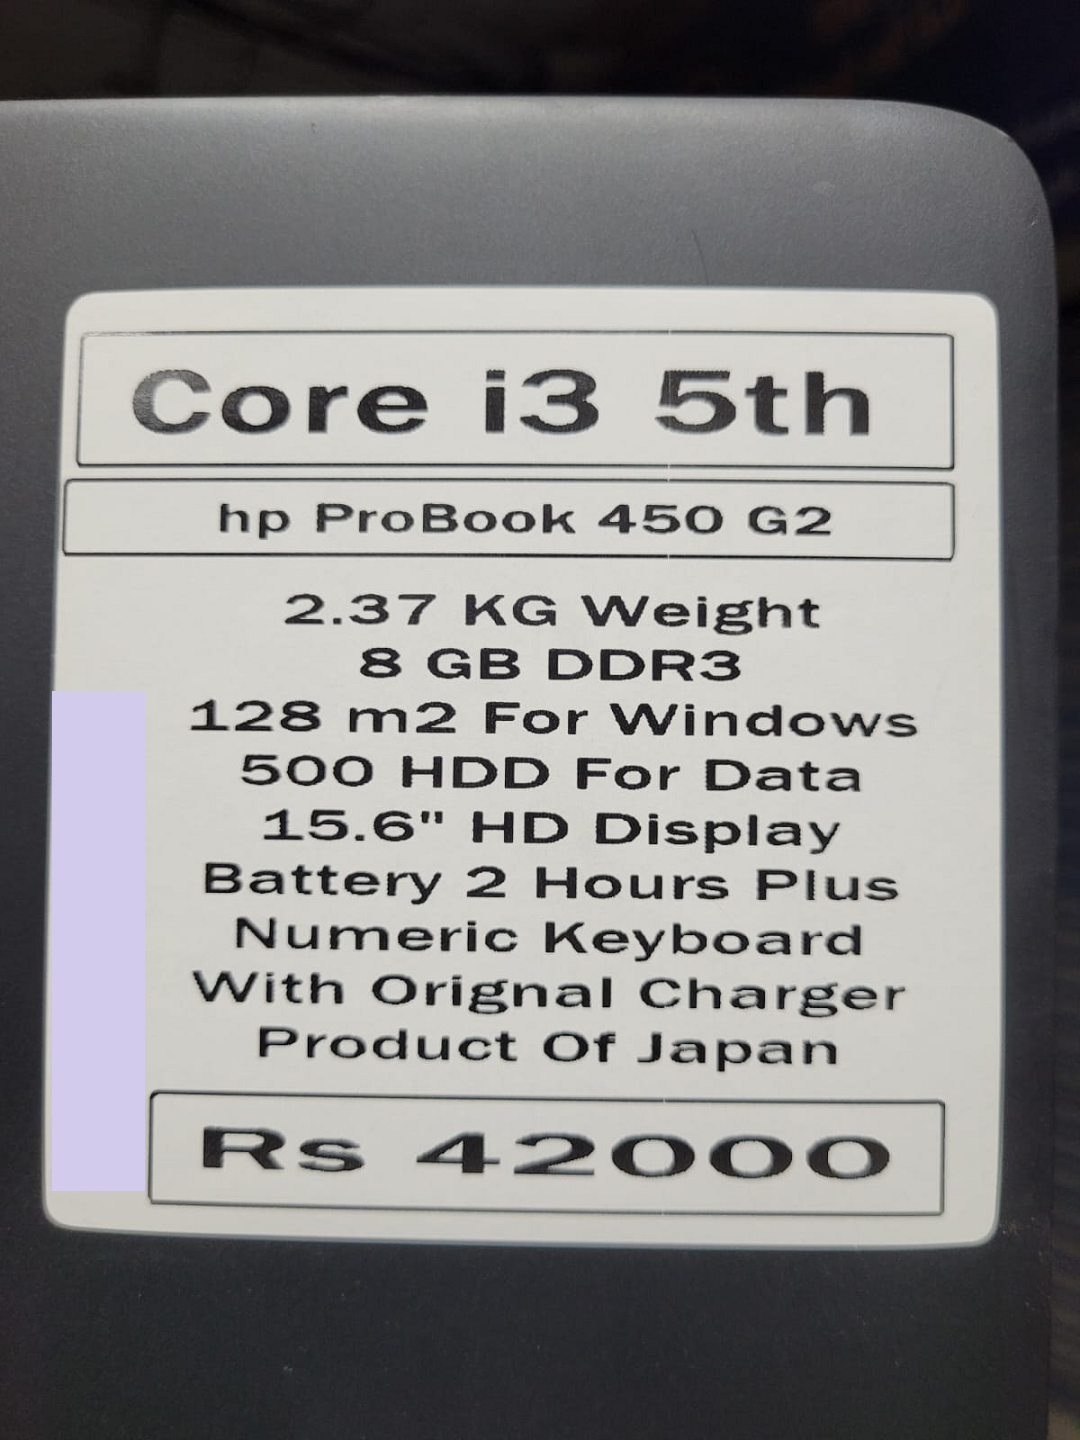 hp ProBook 450 G2 i3 5th Generation Notebook